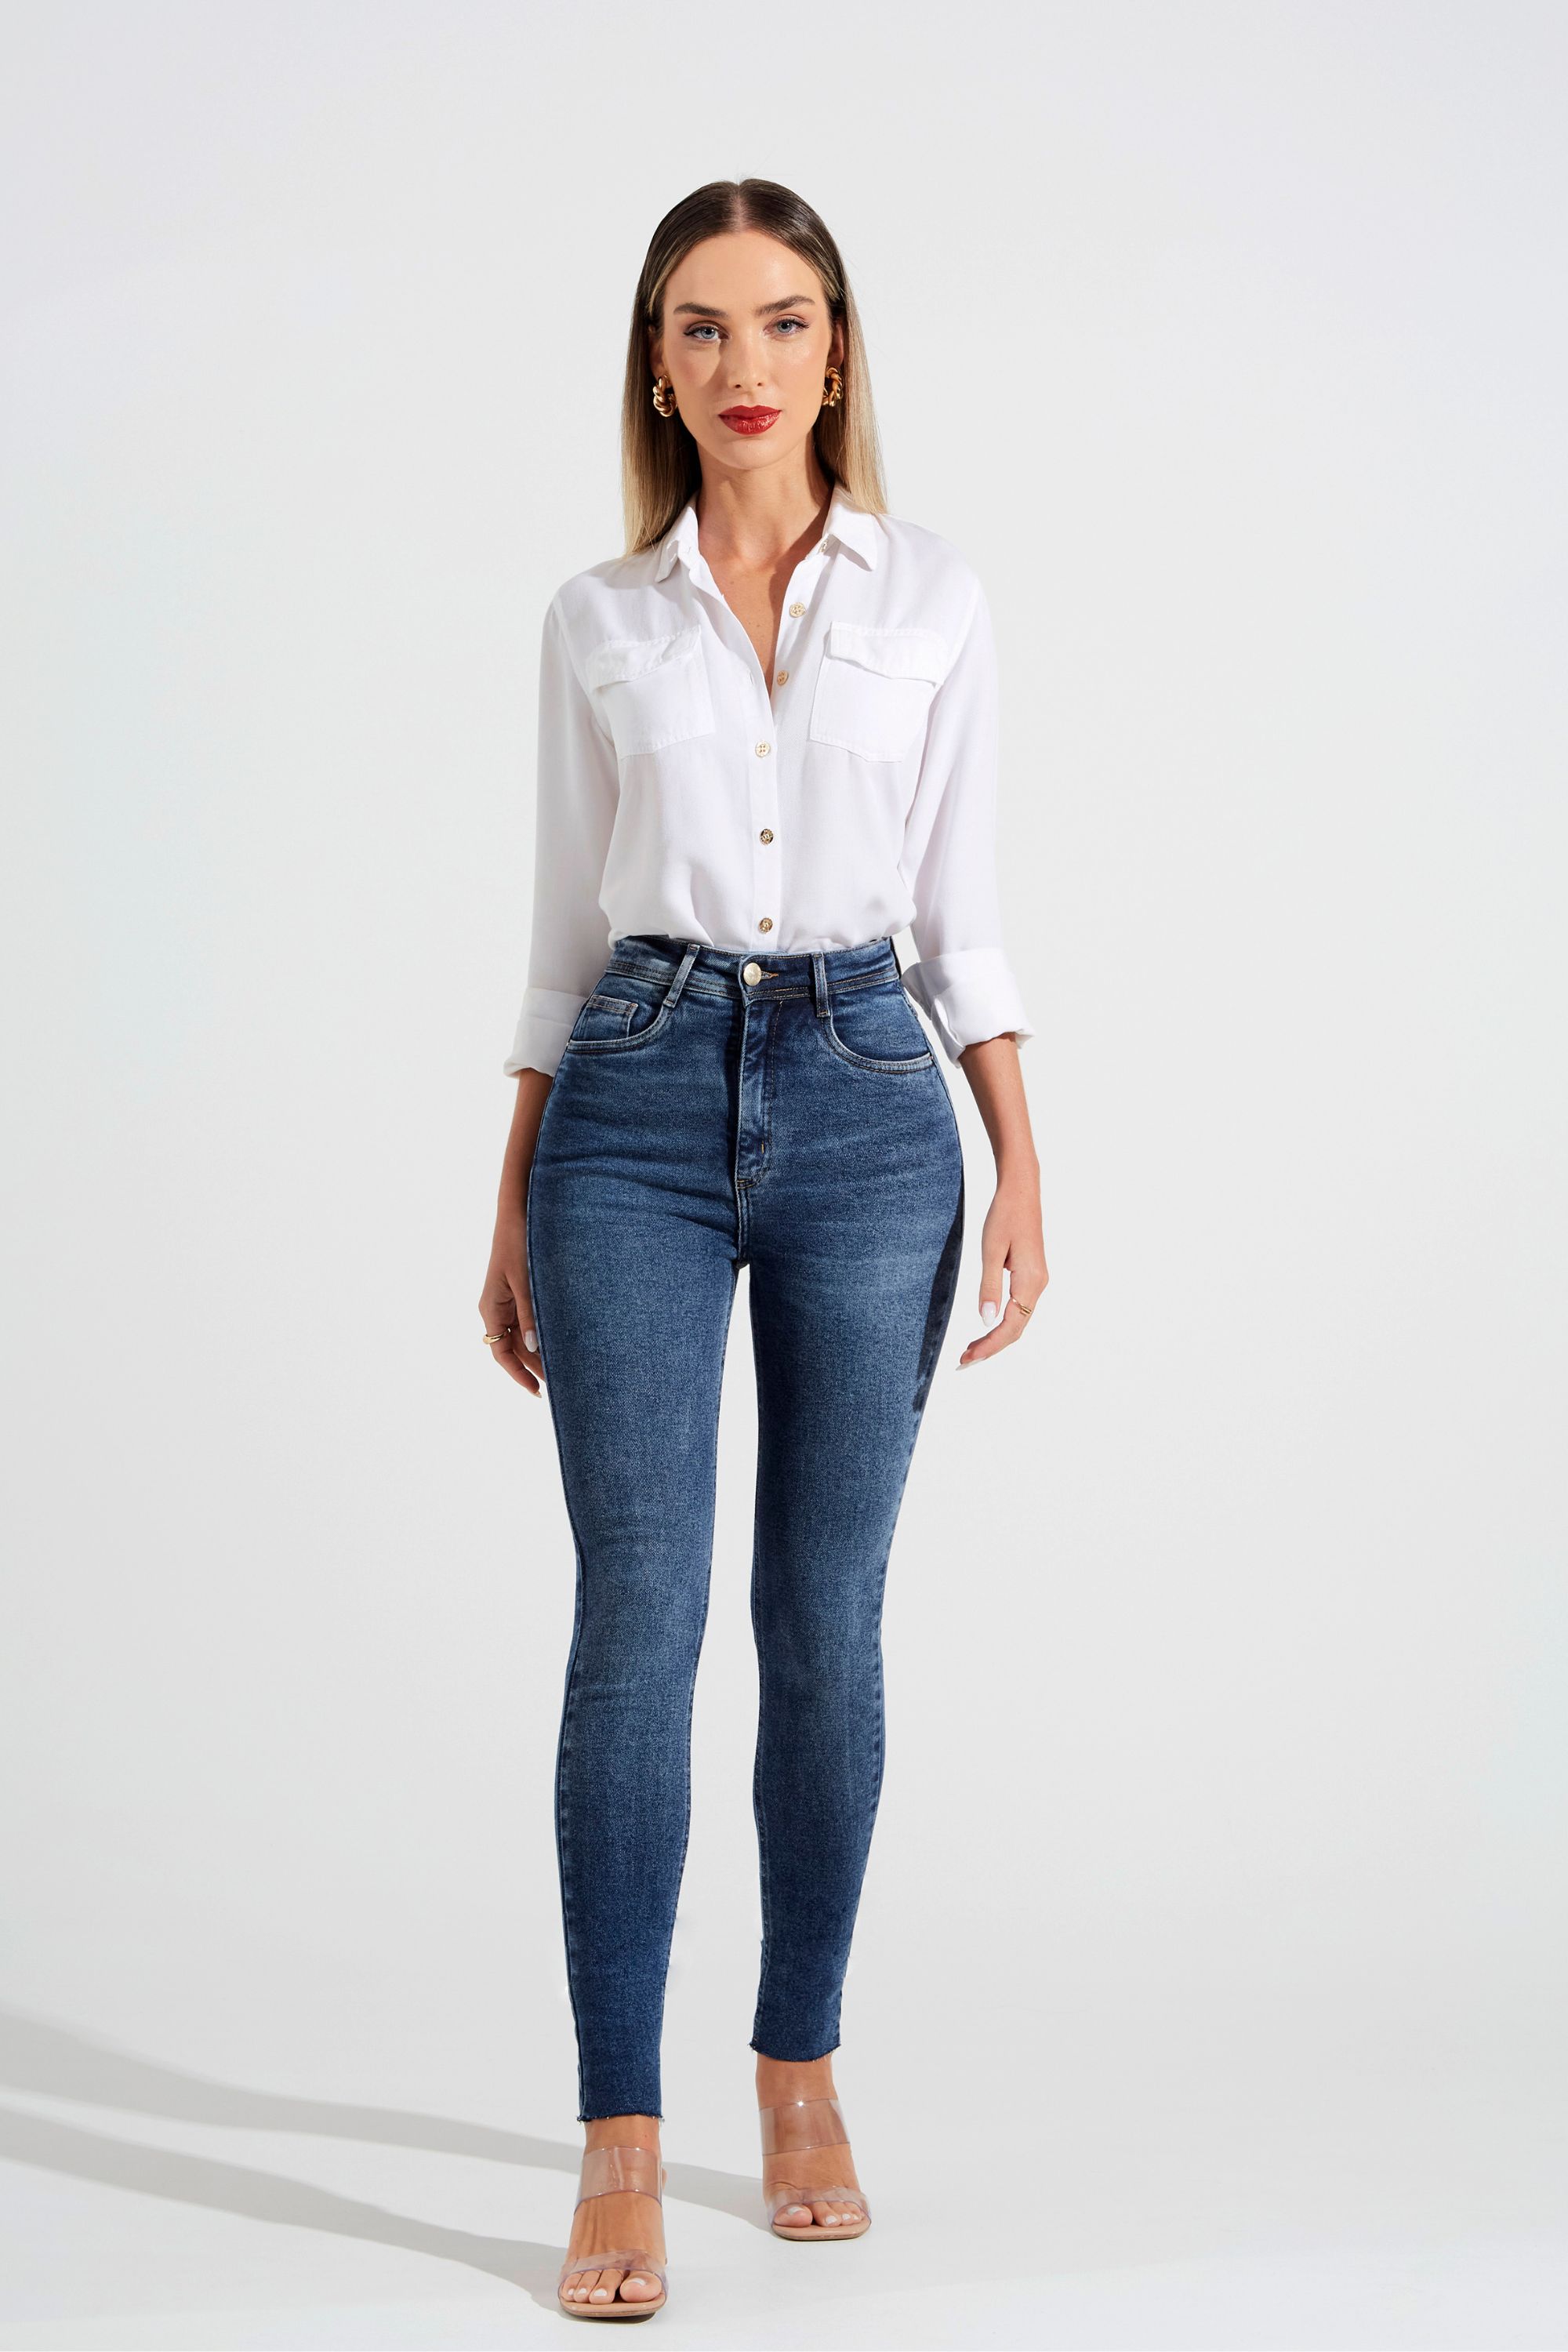 pré-venda] 56713 - jeans super modeladora - 56713 - jeans super